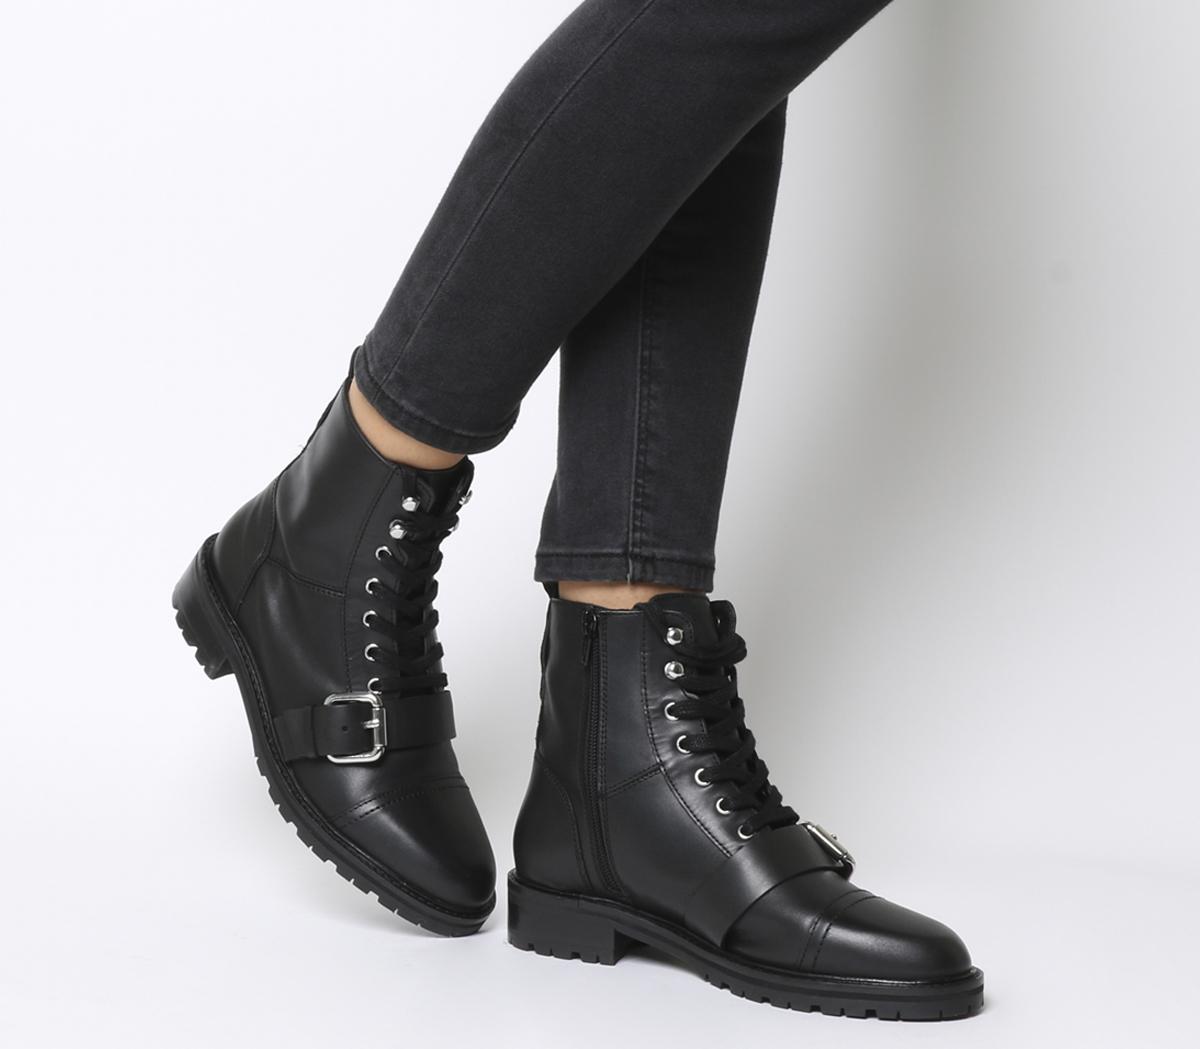 black heeled buckle boots